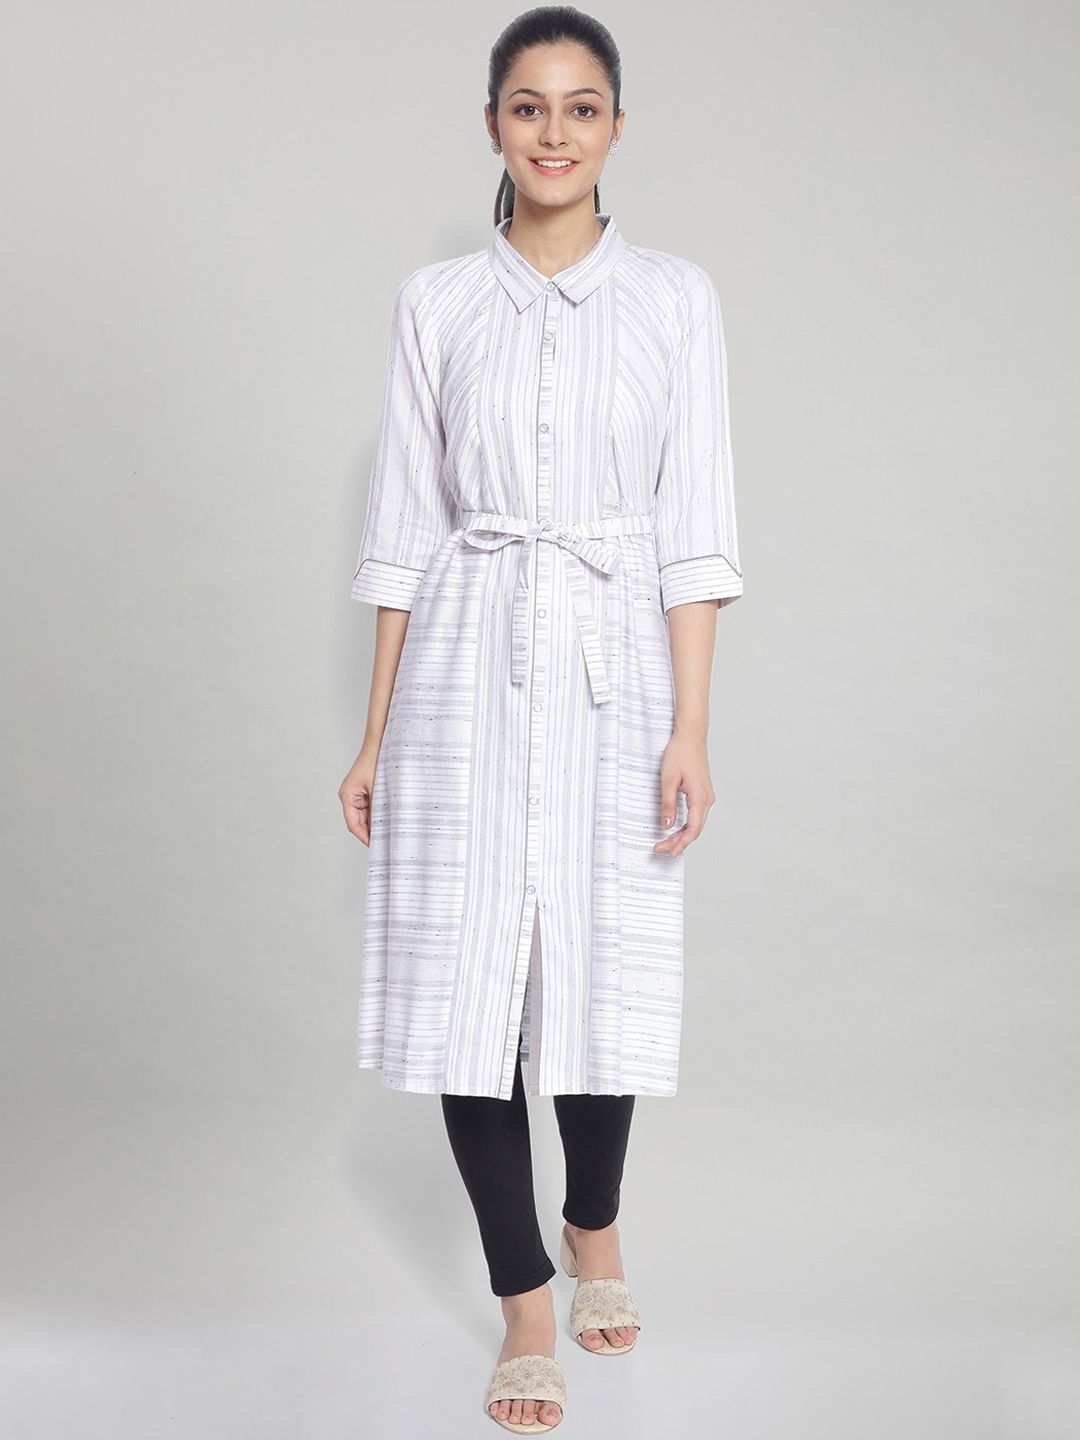 AURELIA White & Grey Striped Shirt Midi Dress With Waist Tie Up Price in India